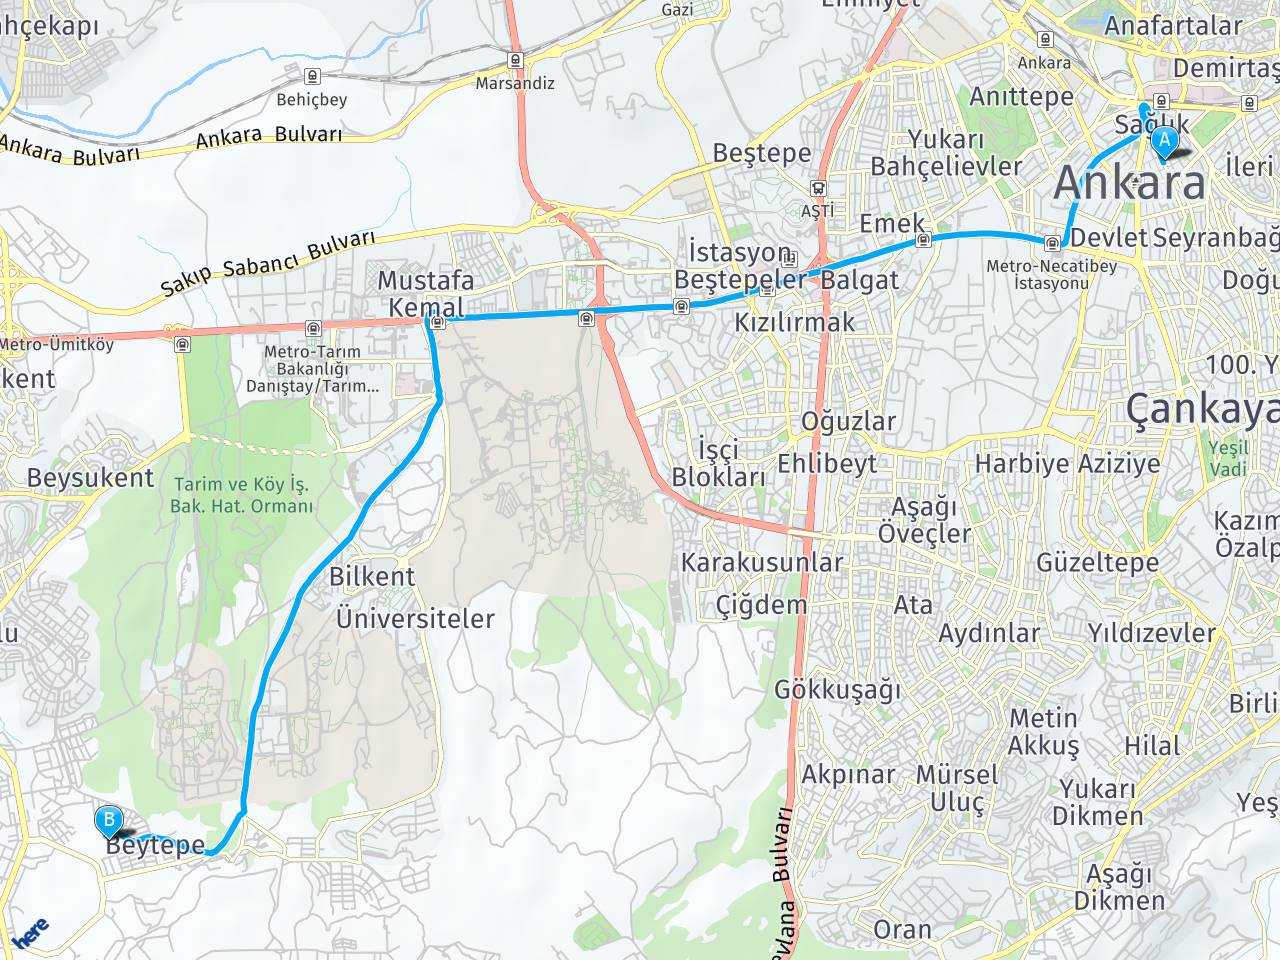 Ankara Kizilay Mithatpaca Caddesi 25/15 Sahn 1goruntuleme Merkezi Ankara Beytepe haritası